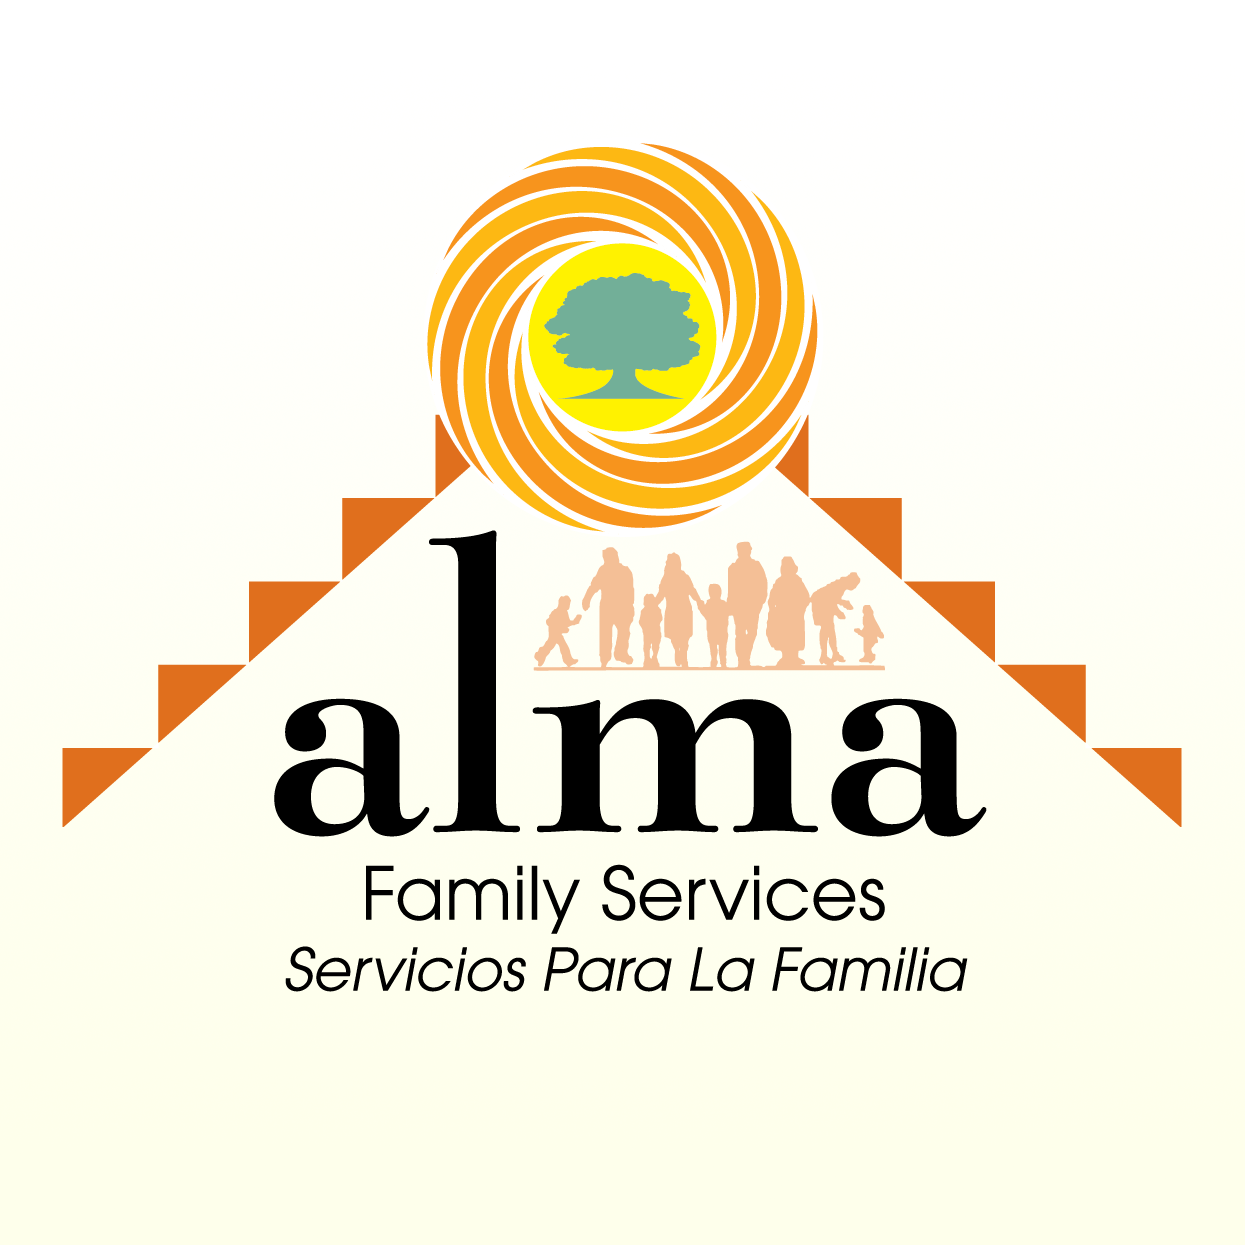 Alma Customer Service